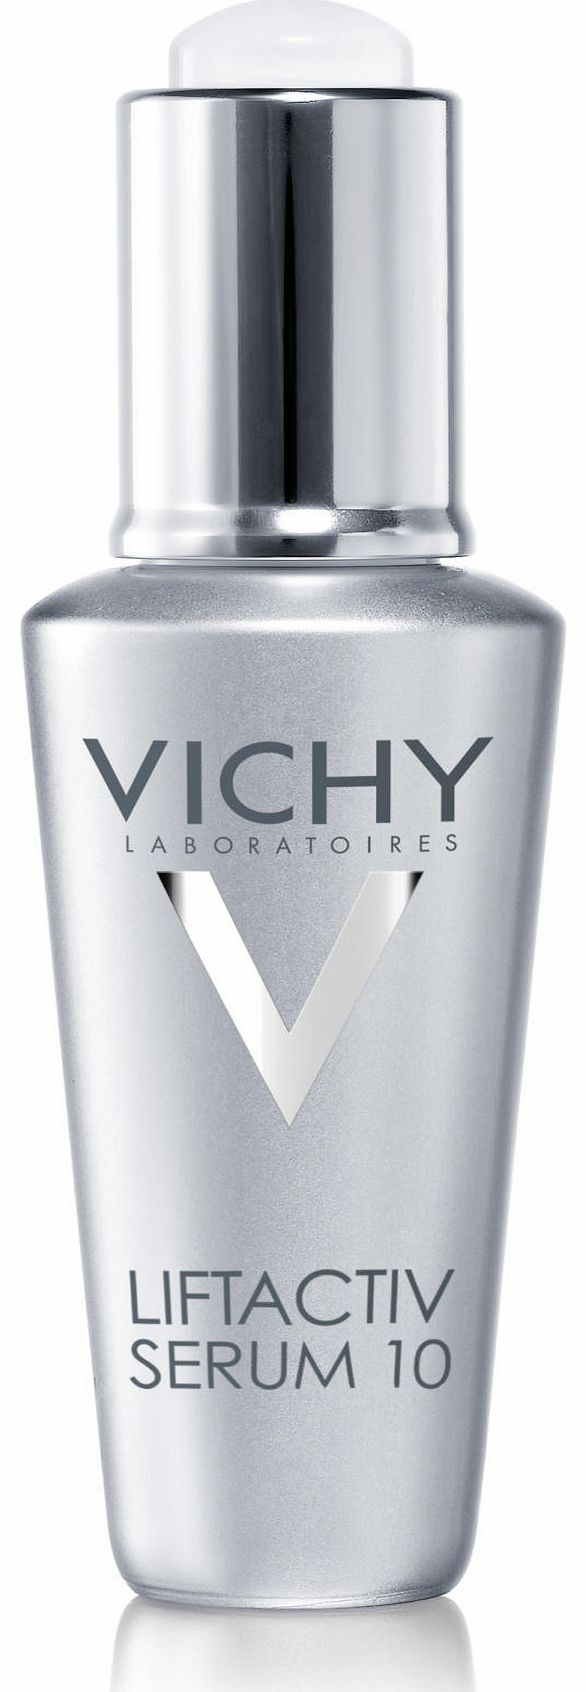 Vichy Liftactiv Derm Source Serum 10